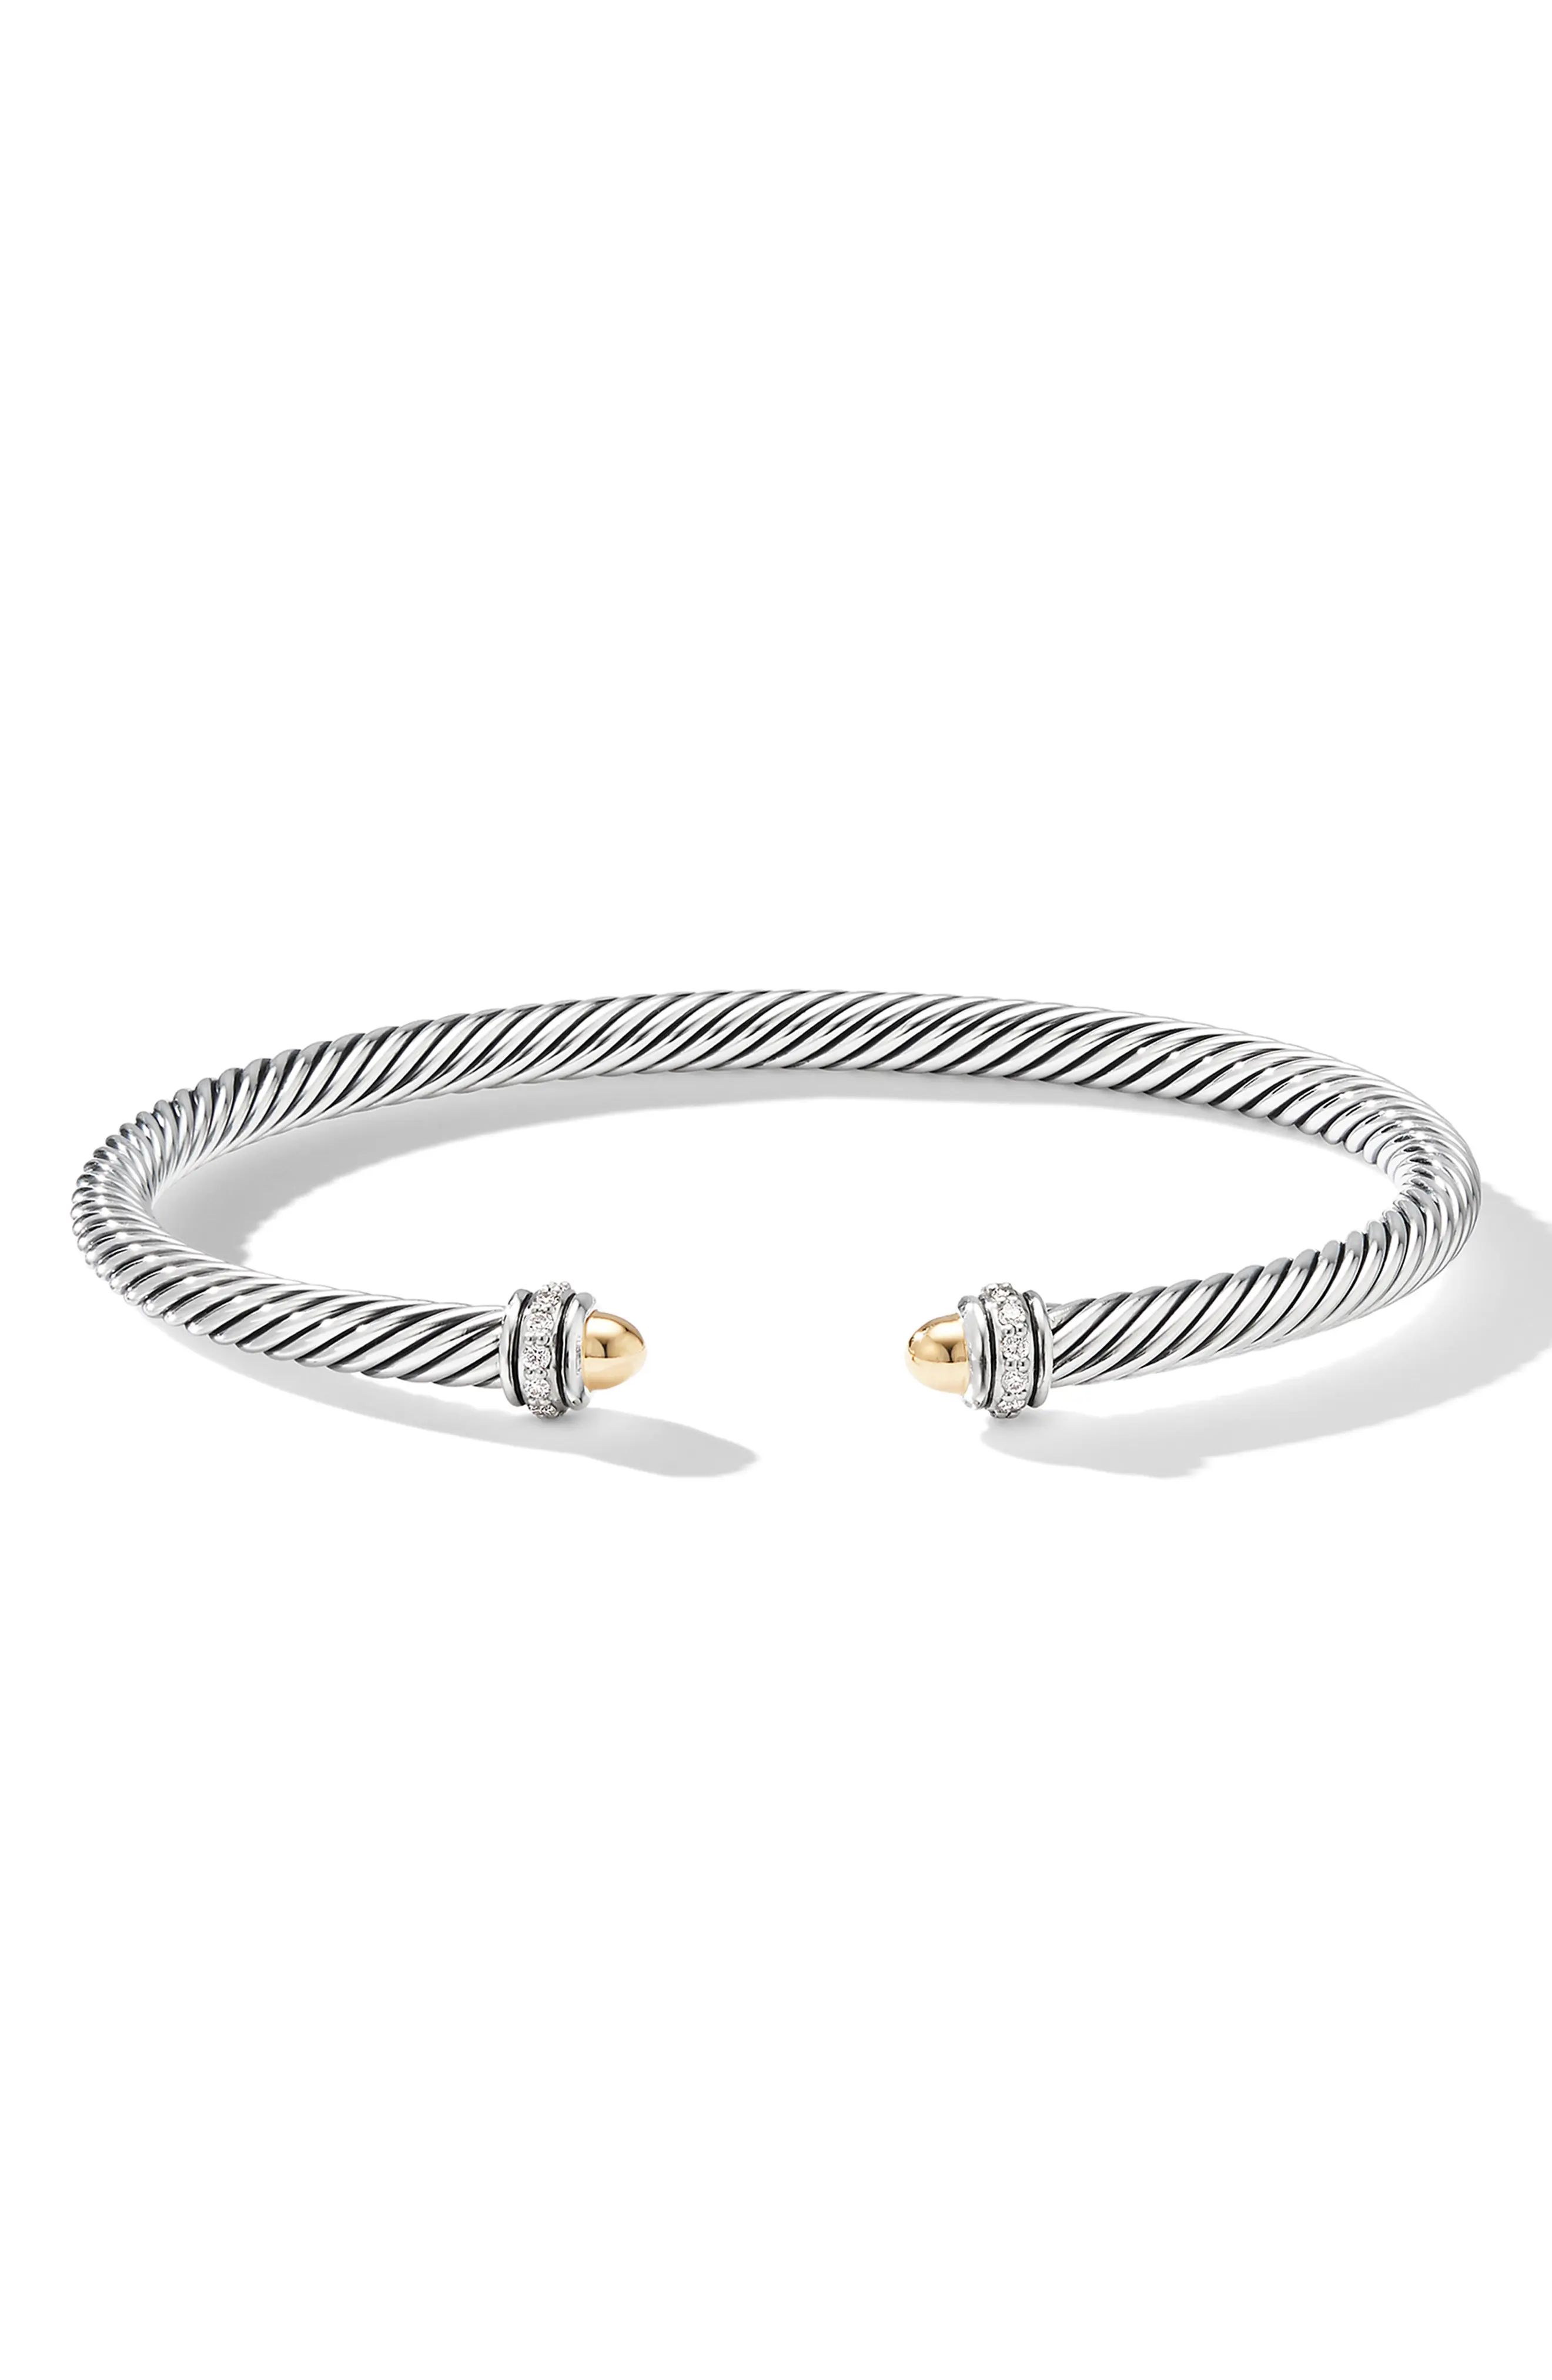 Women's David Yurman 4mm Cable Classic Bracelet With 18K Gold & Diamonds | Nordstrom